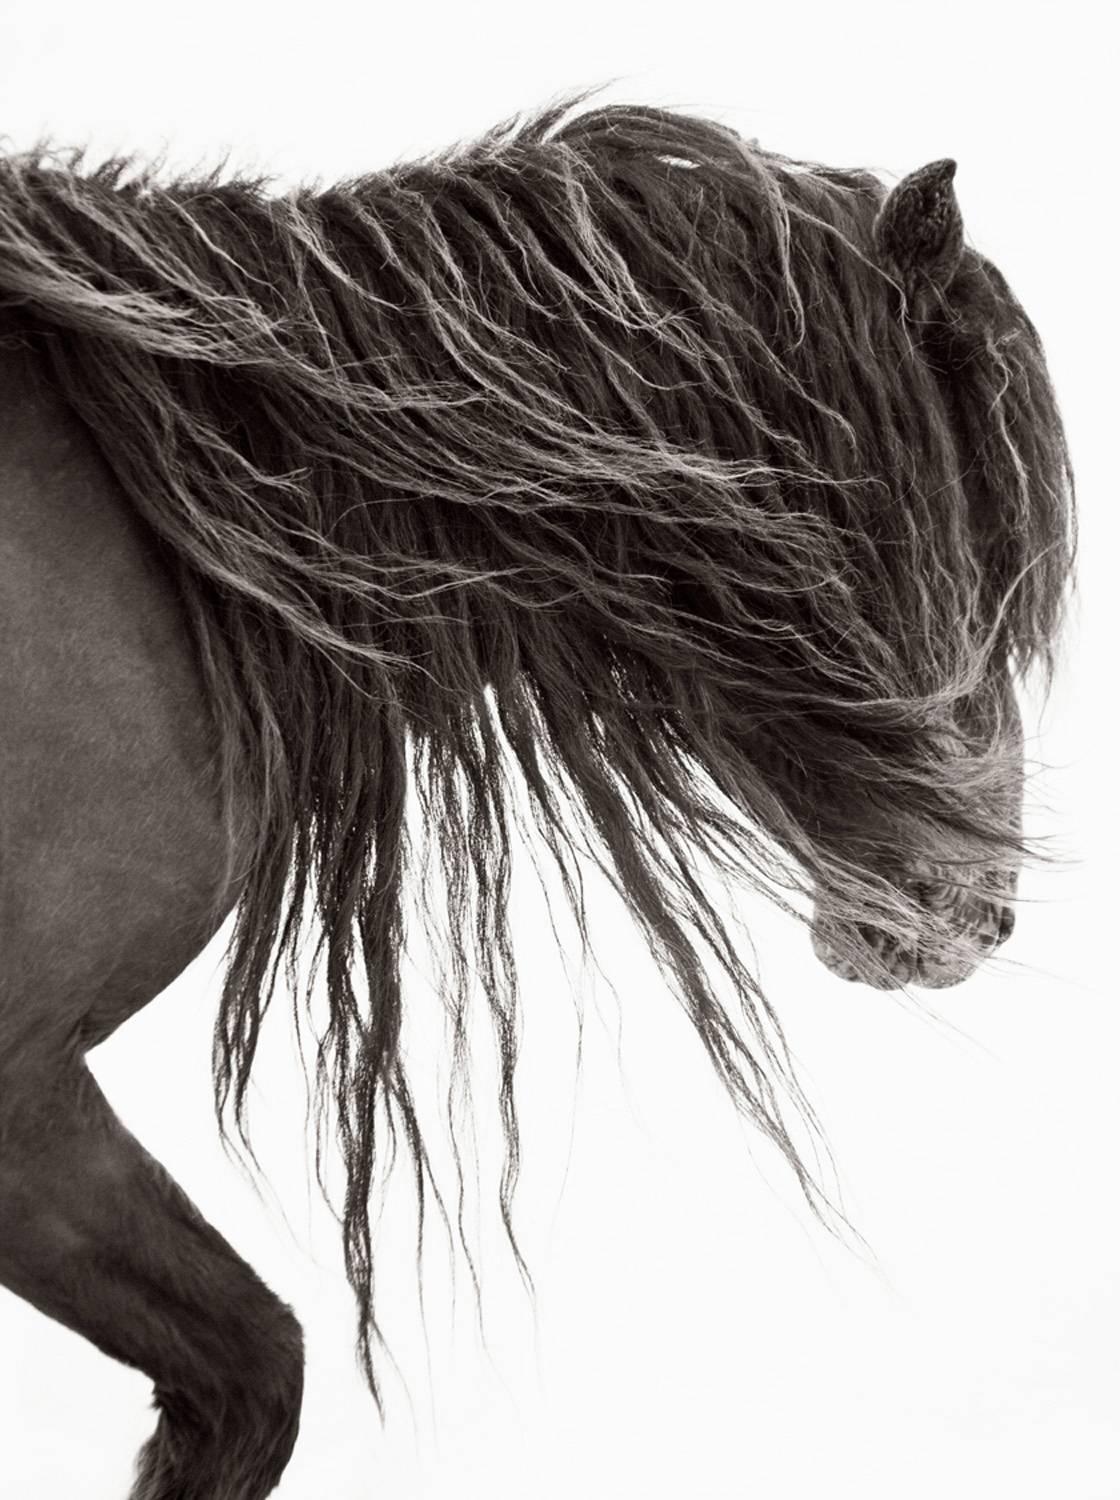 Drew Doggett Portrait Photograph - Wind Blown